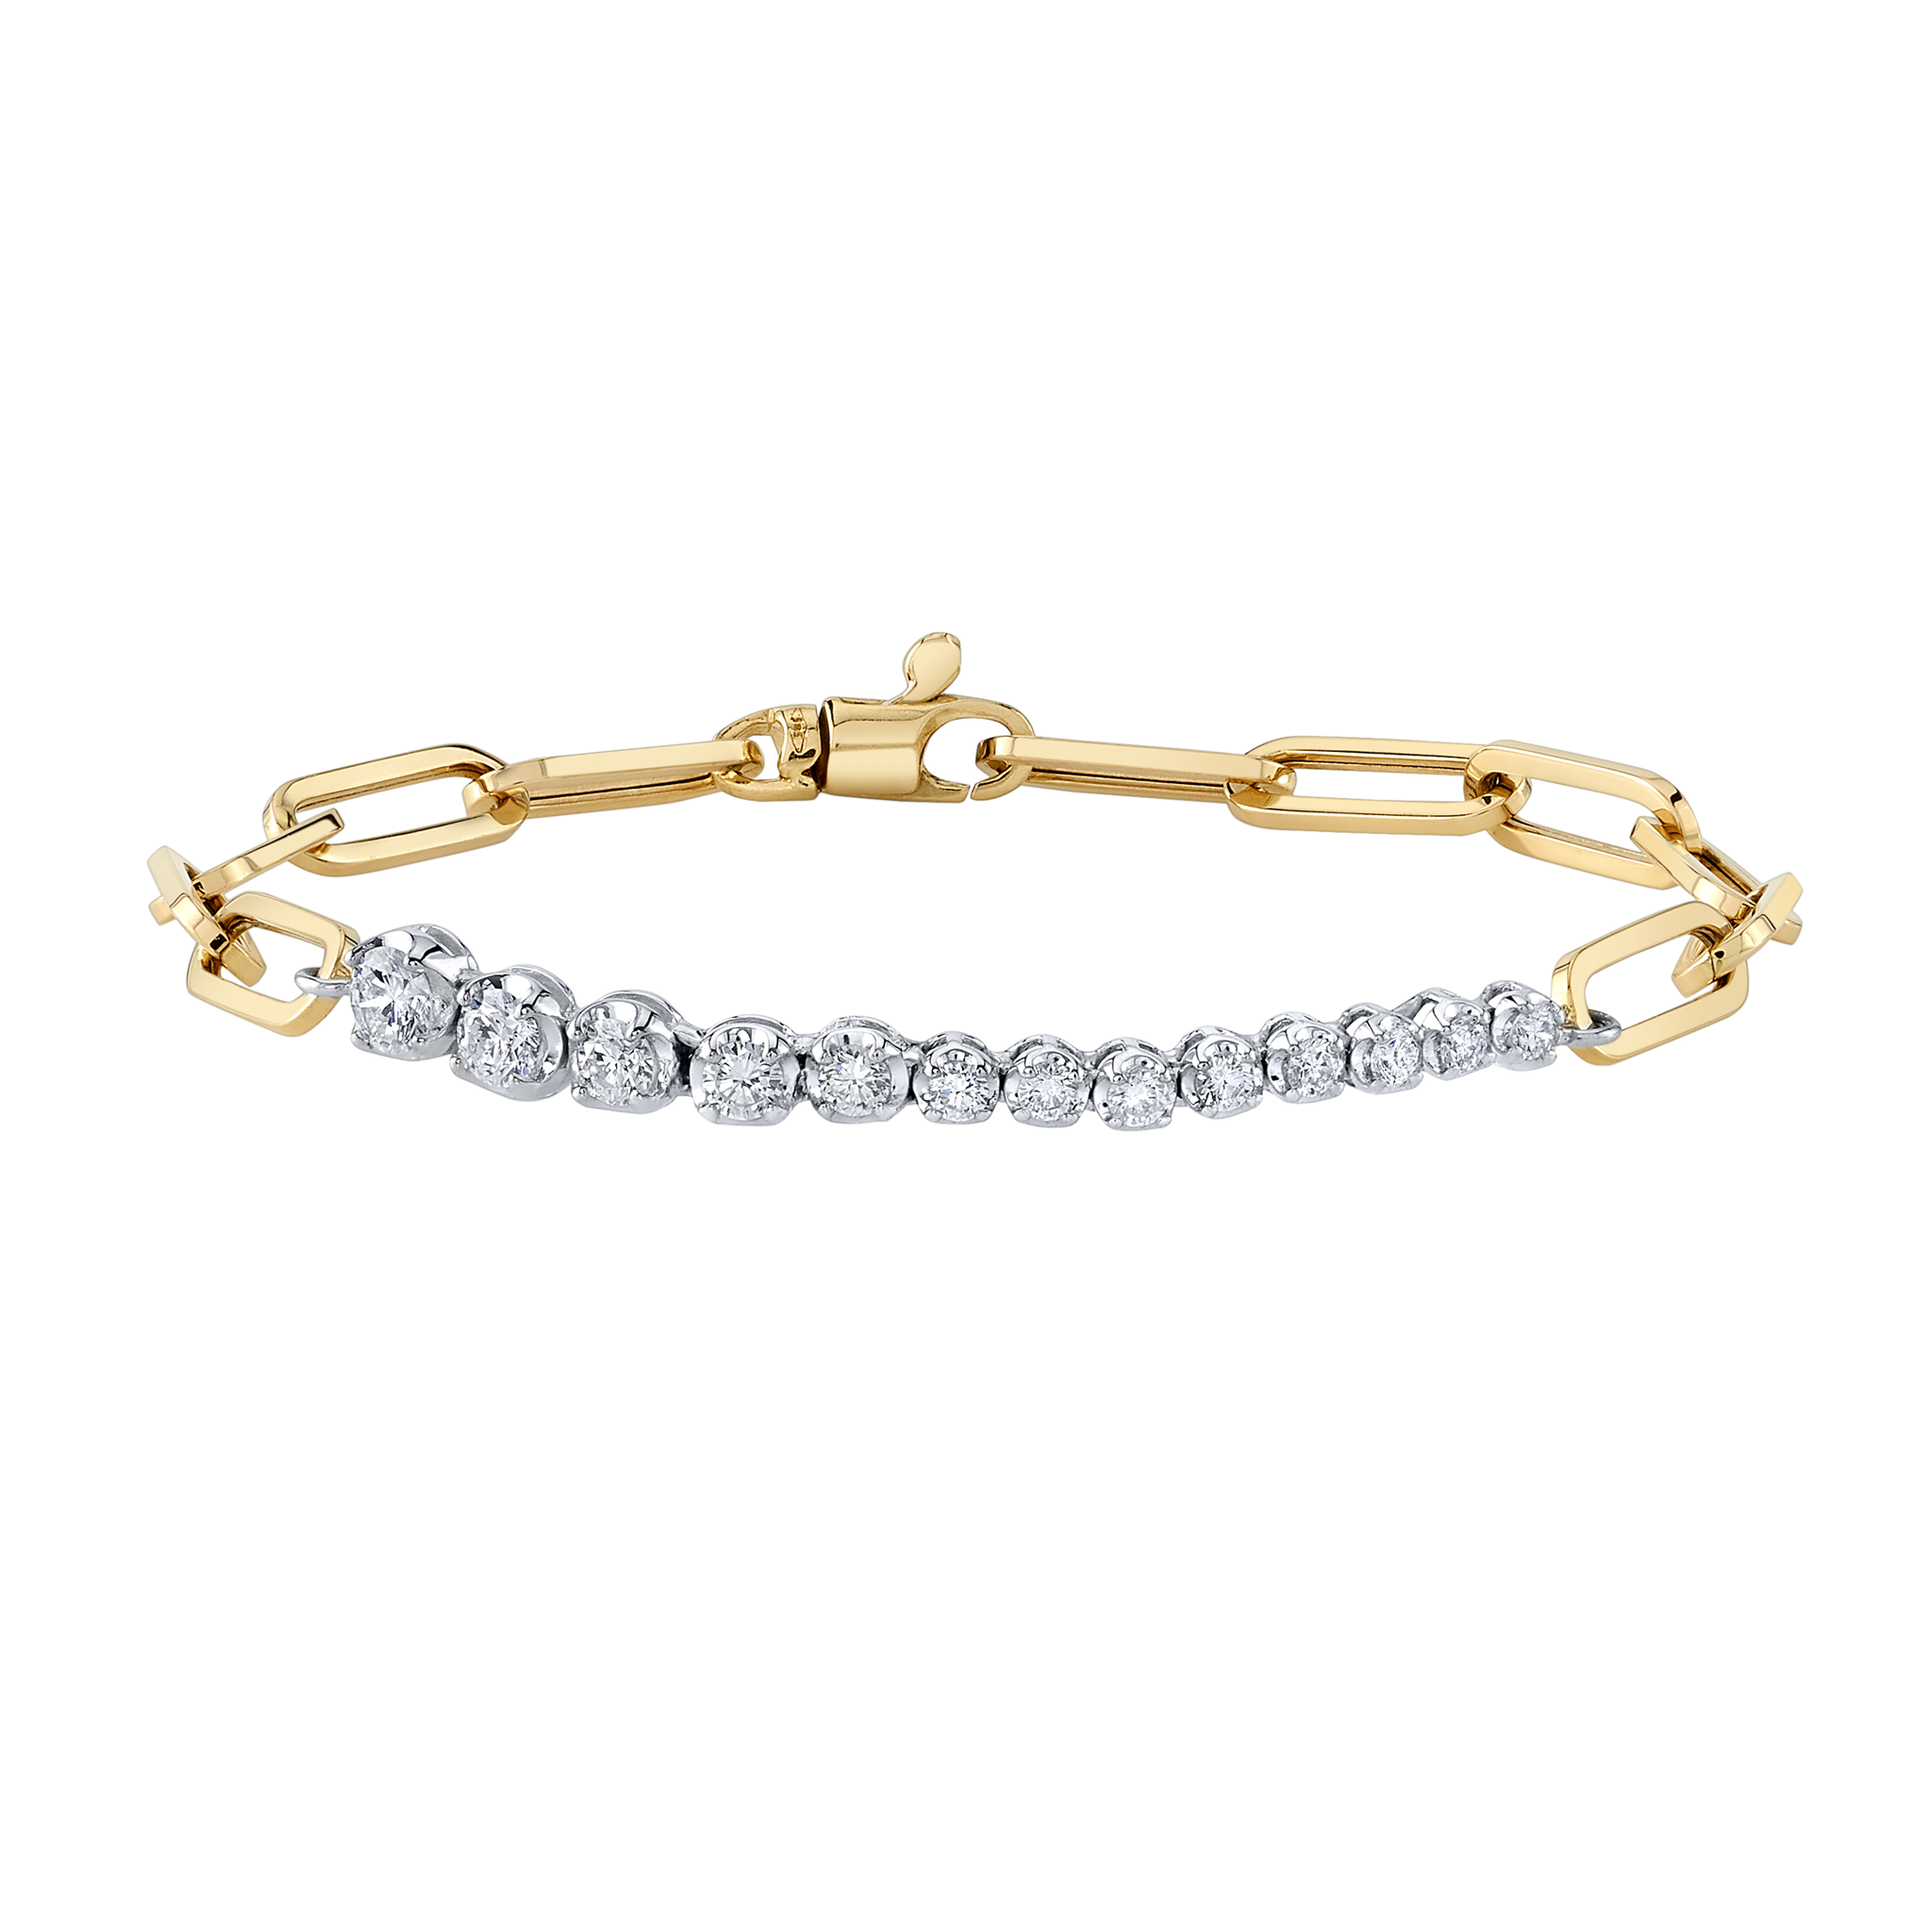 Ascending Diamonds on Chain Tennis Bracelet - Gabriela Artigas